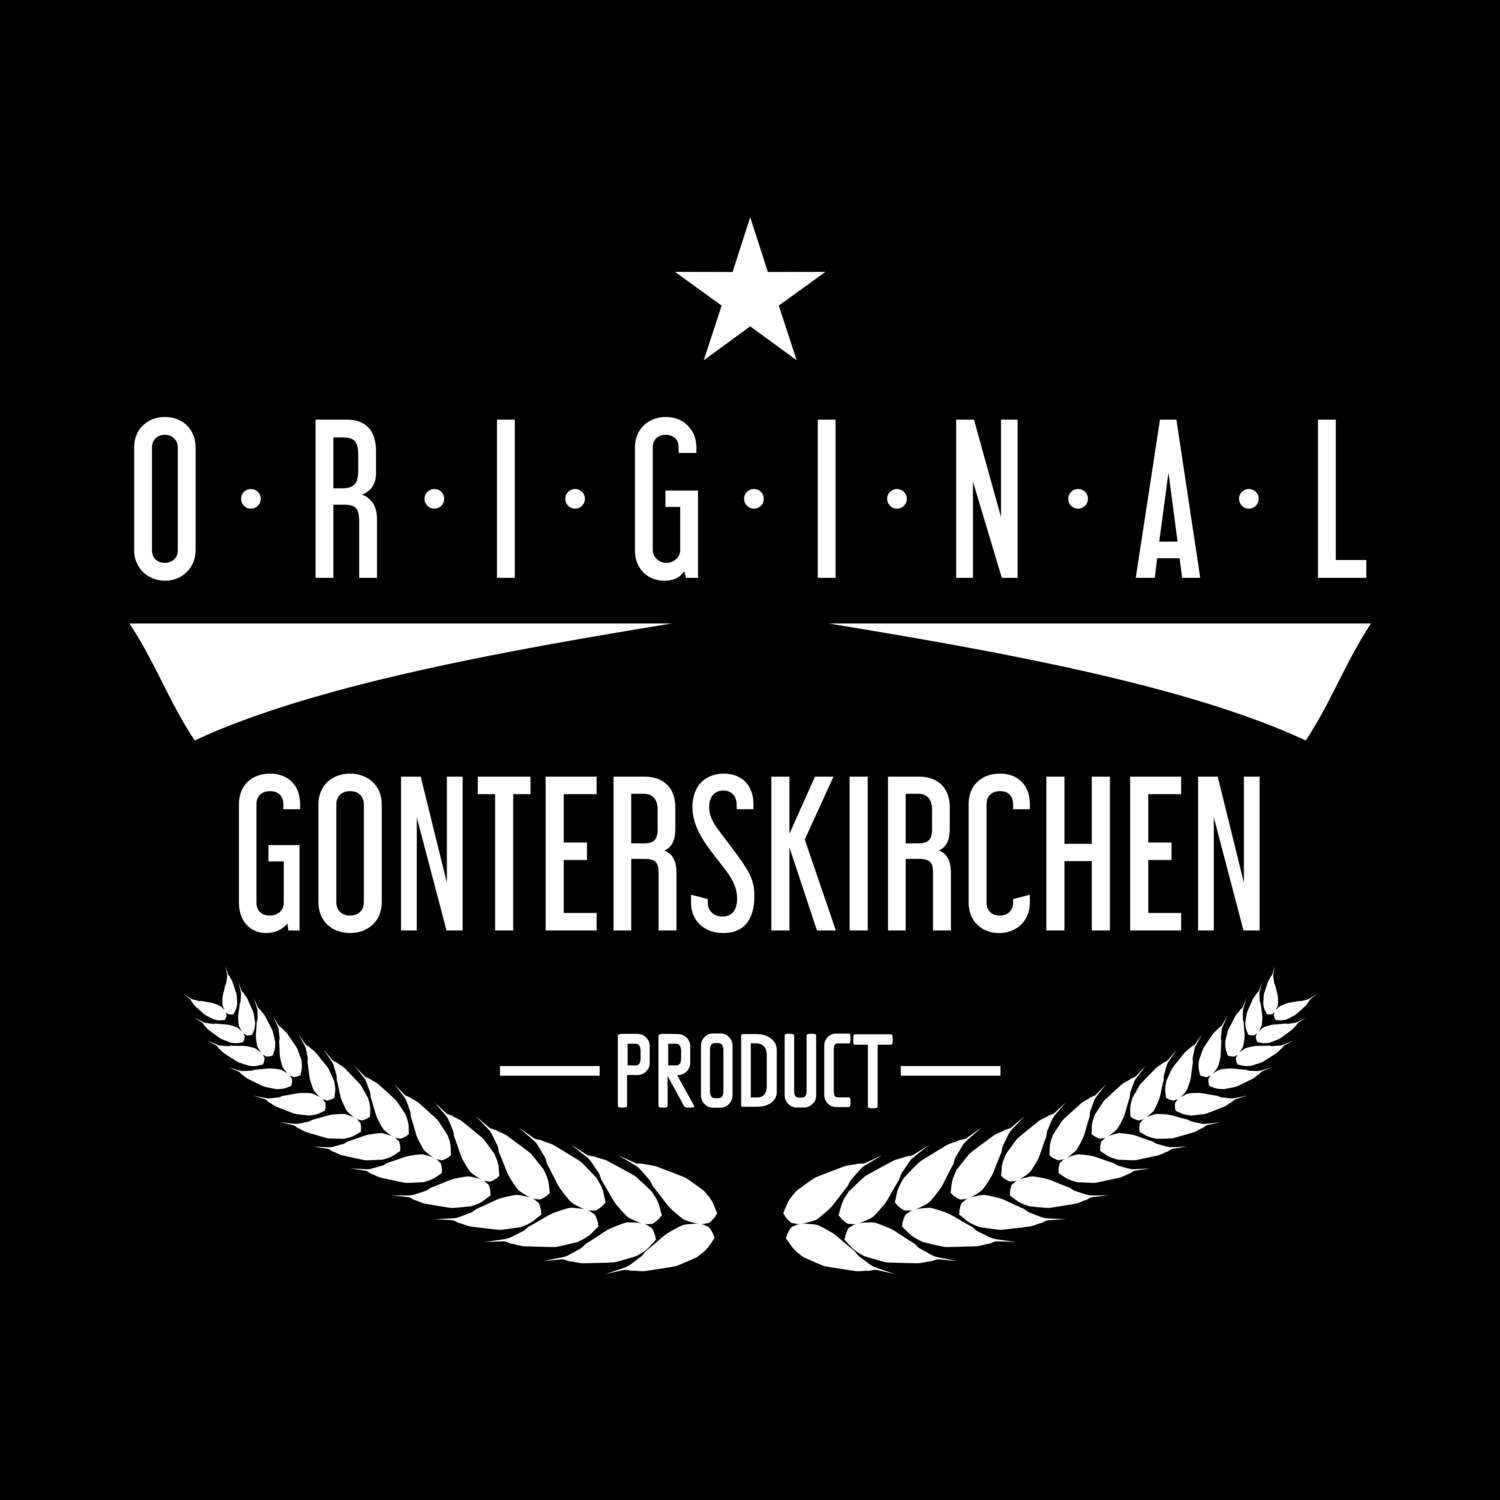 Gonterskirchen T-Shirt »Original Product«